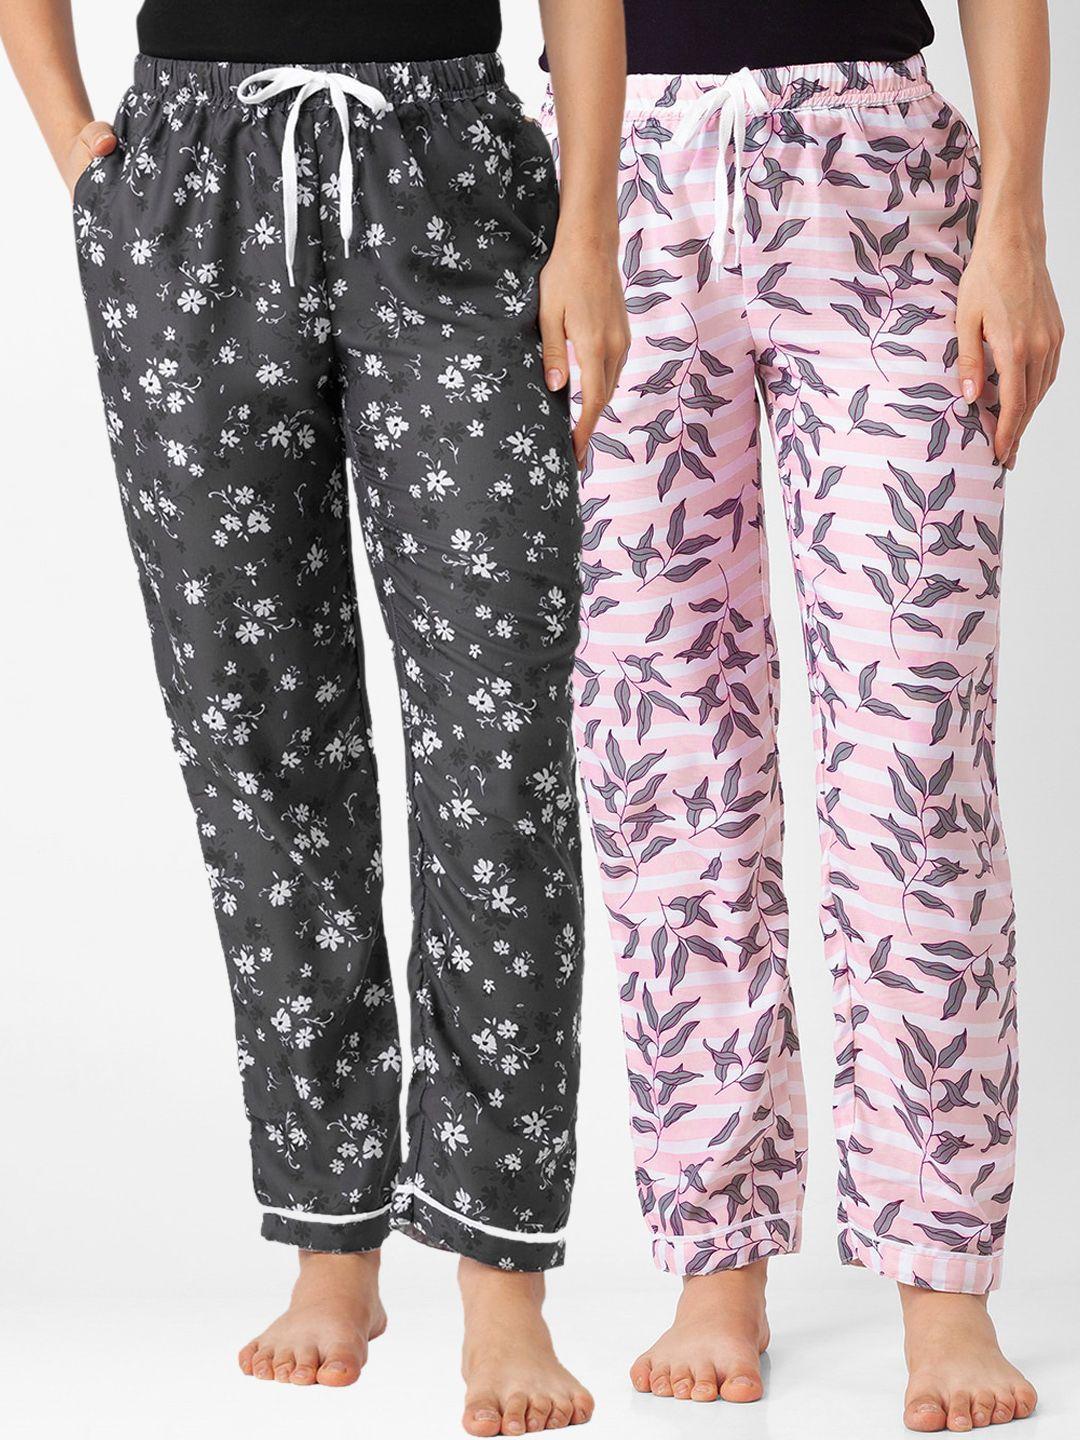 fashionrack women set of 2 pink & black floral printed cotton pyjamas